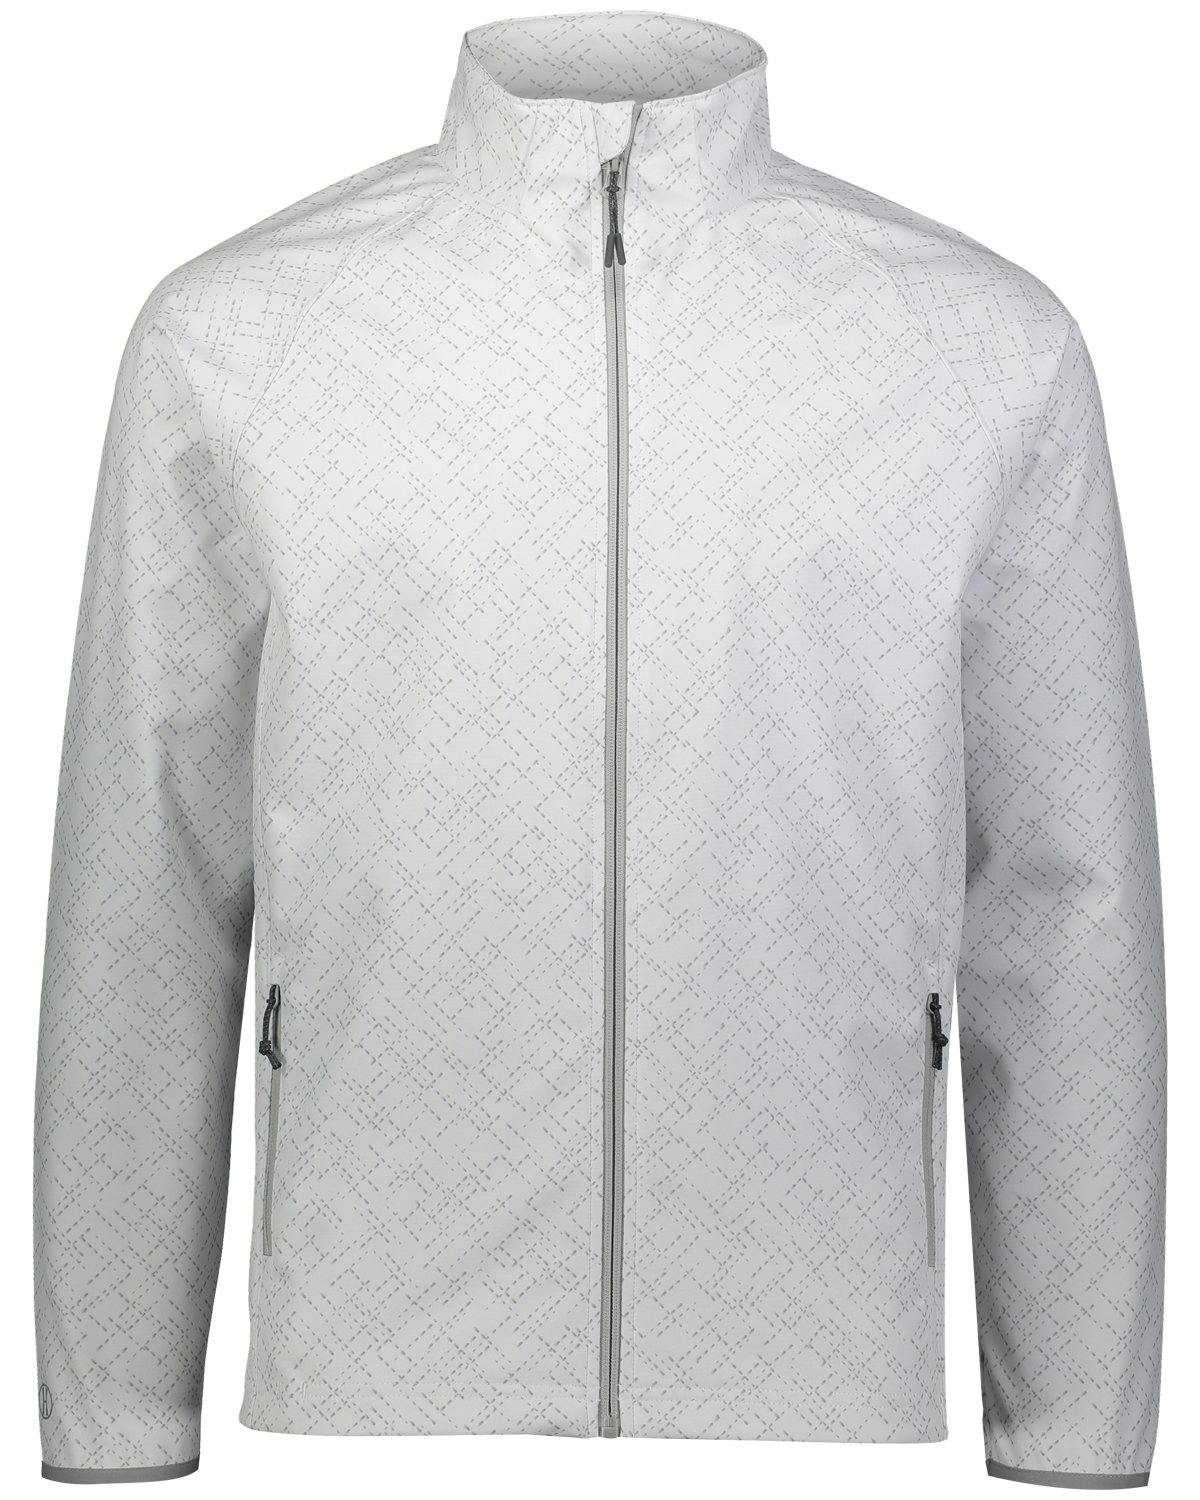 Image for Men's Featherlight Soft Shell Jacket